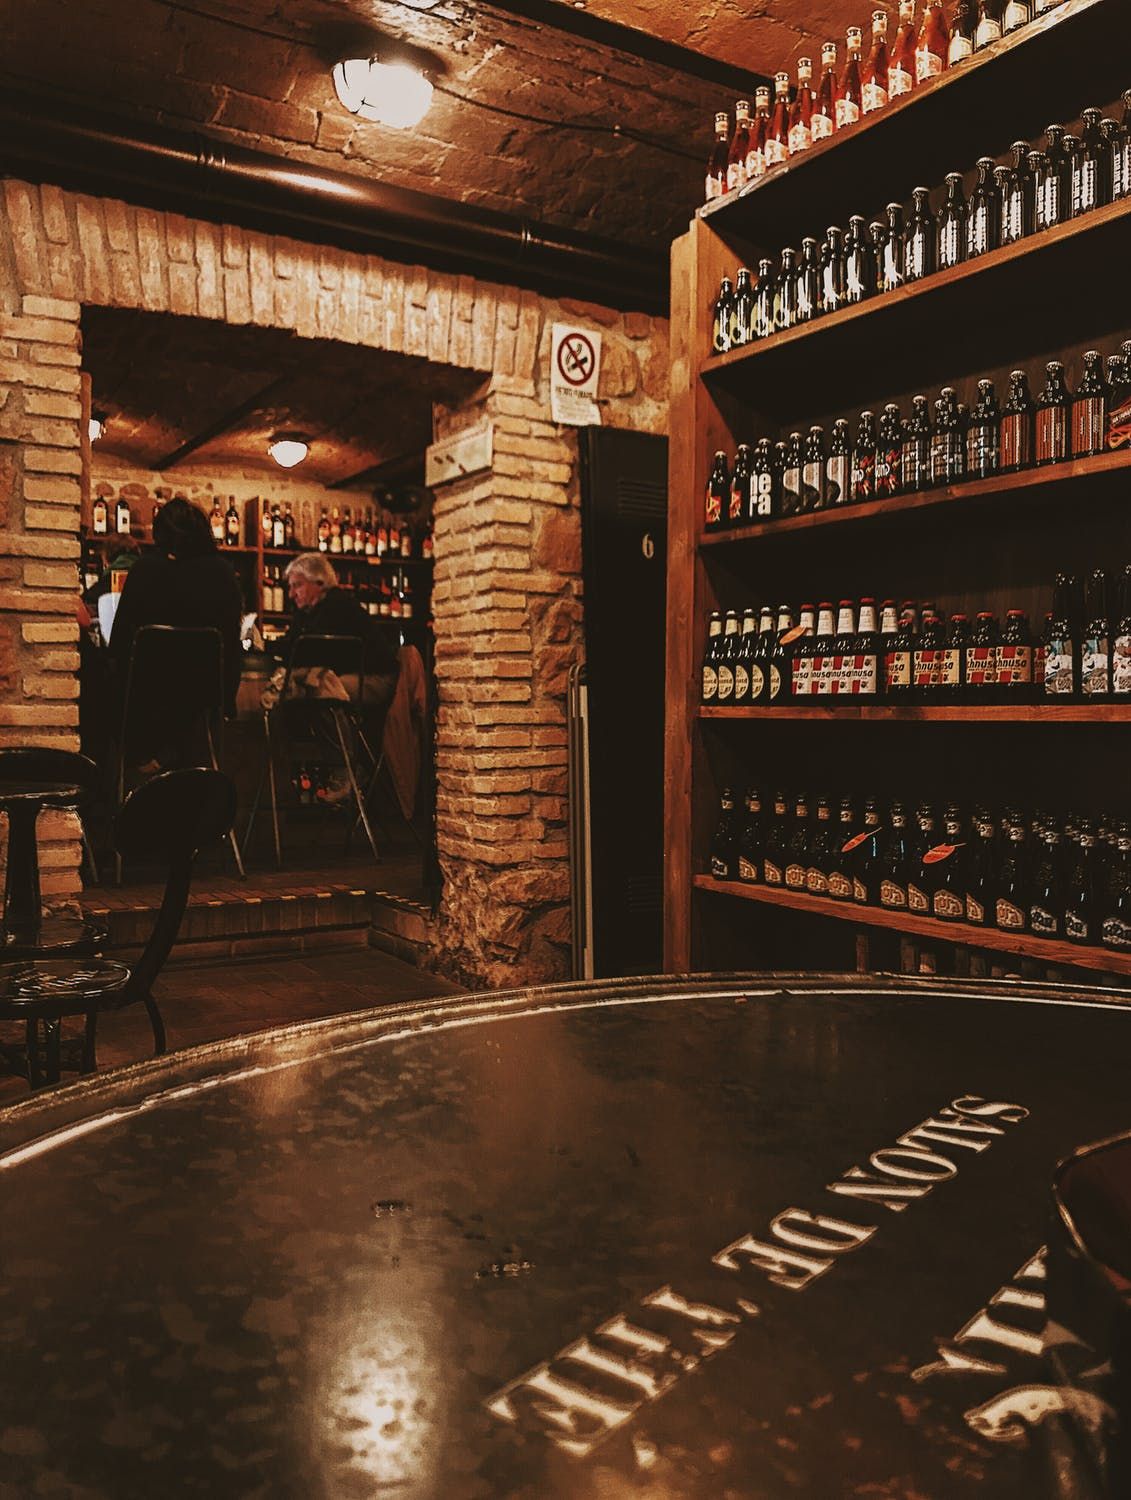 Toni S Wines Liquors Beer Gallery